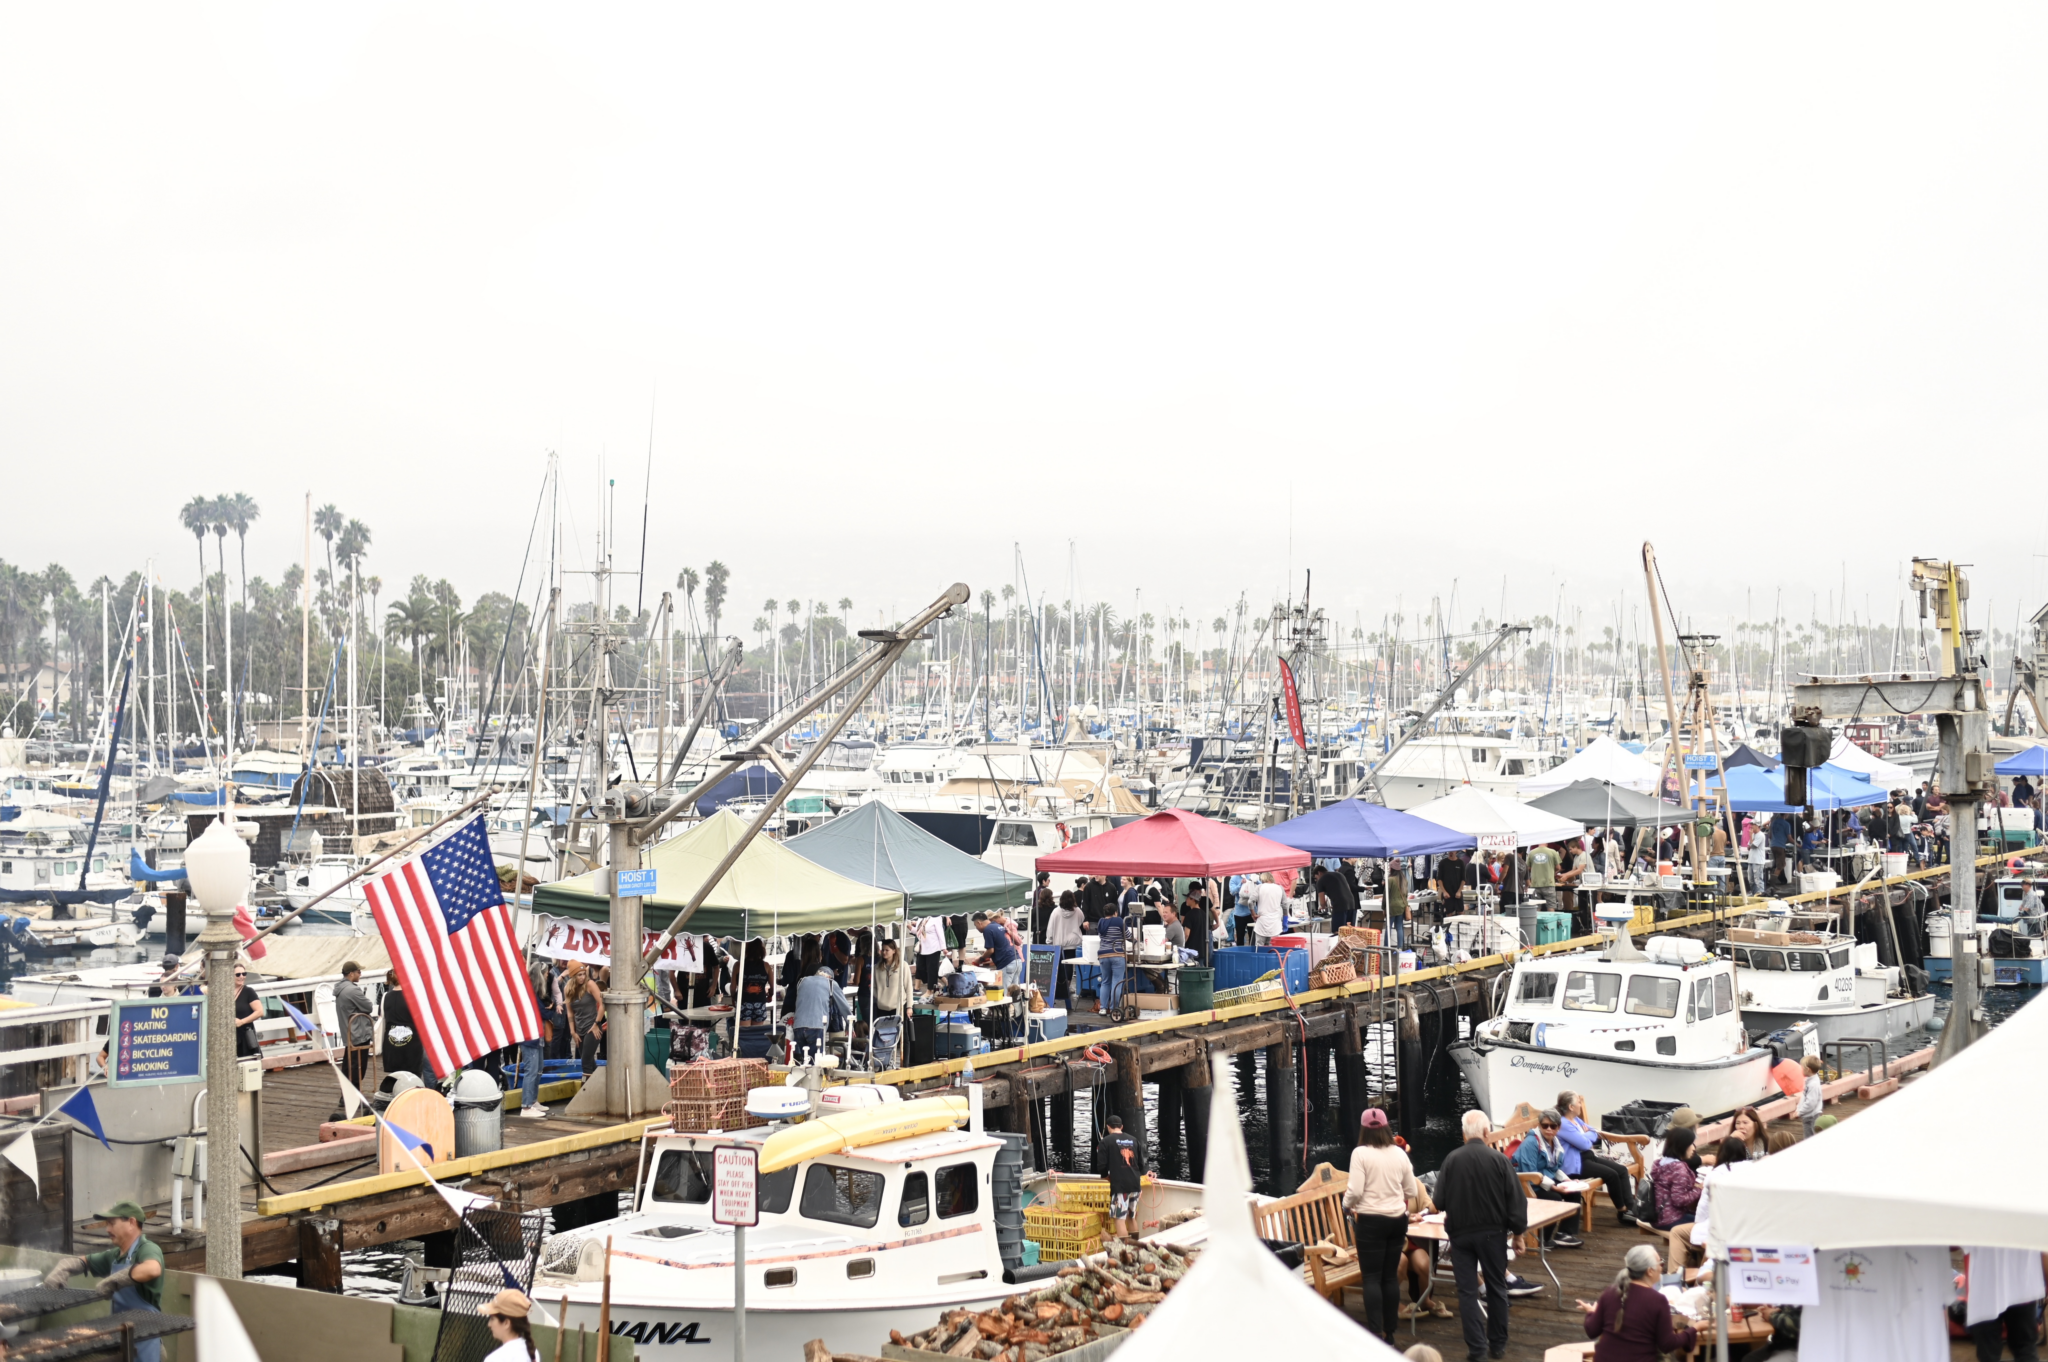 Quite a catch: the Santa Barbara Harbor & Seafood Festival